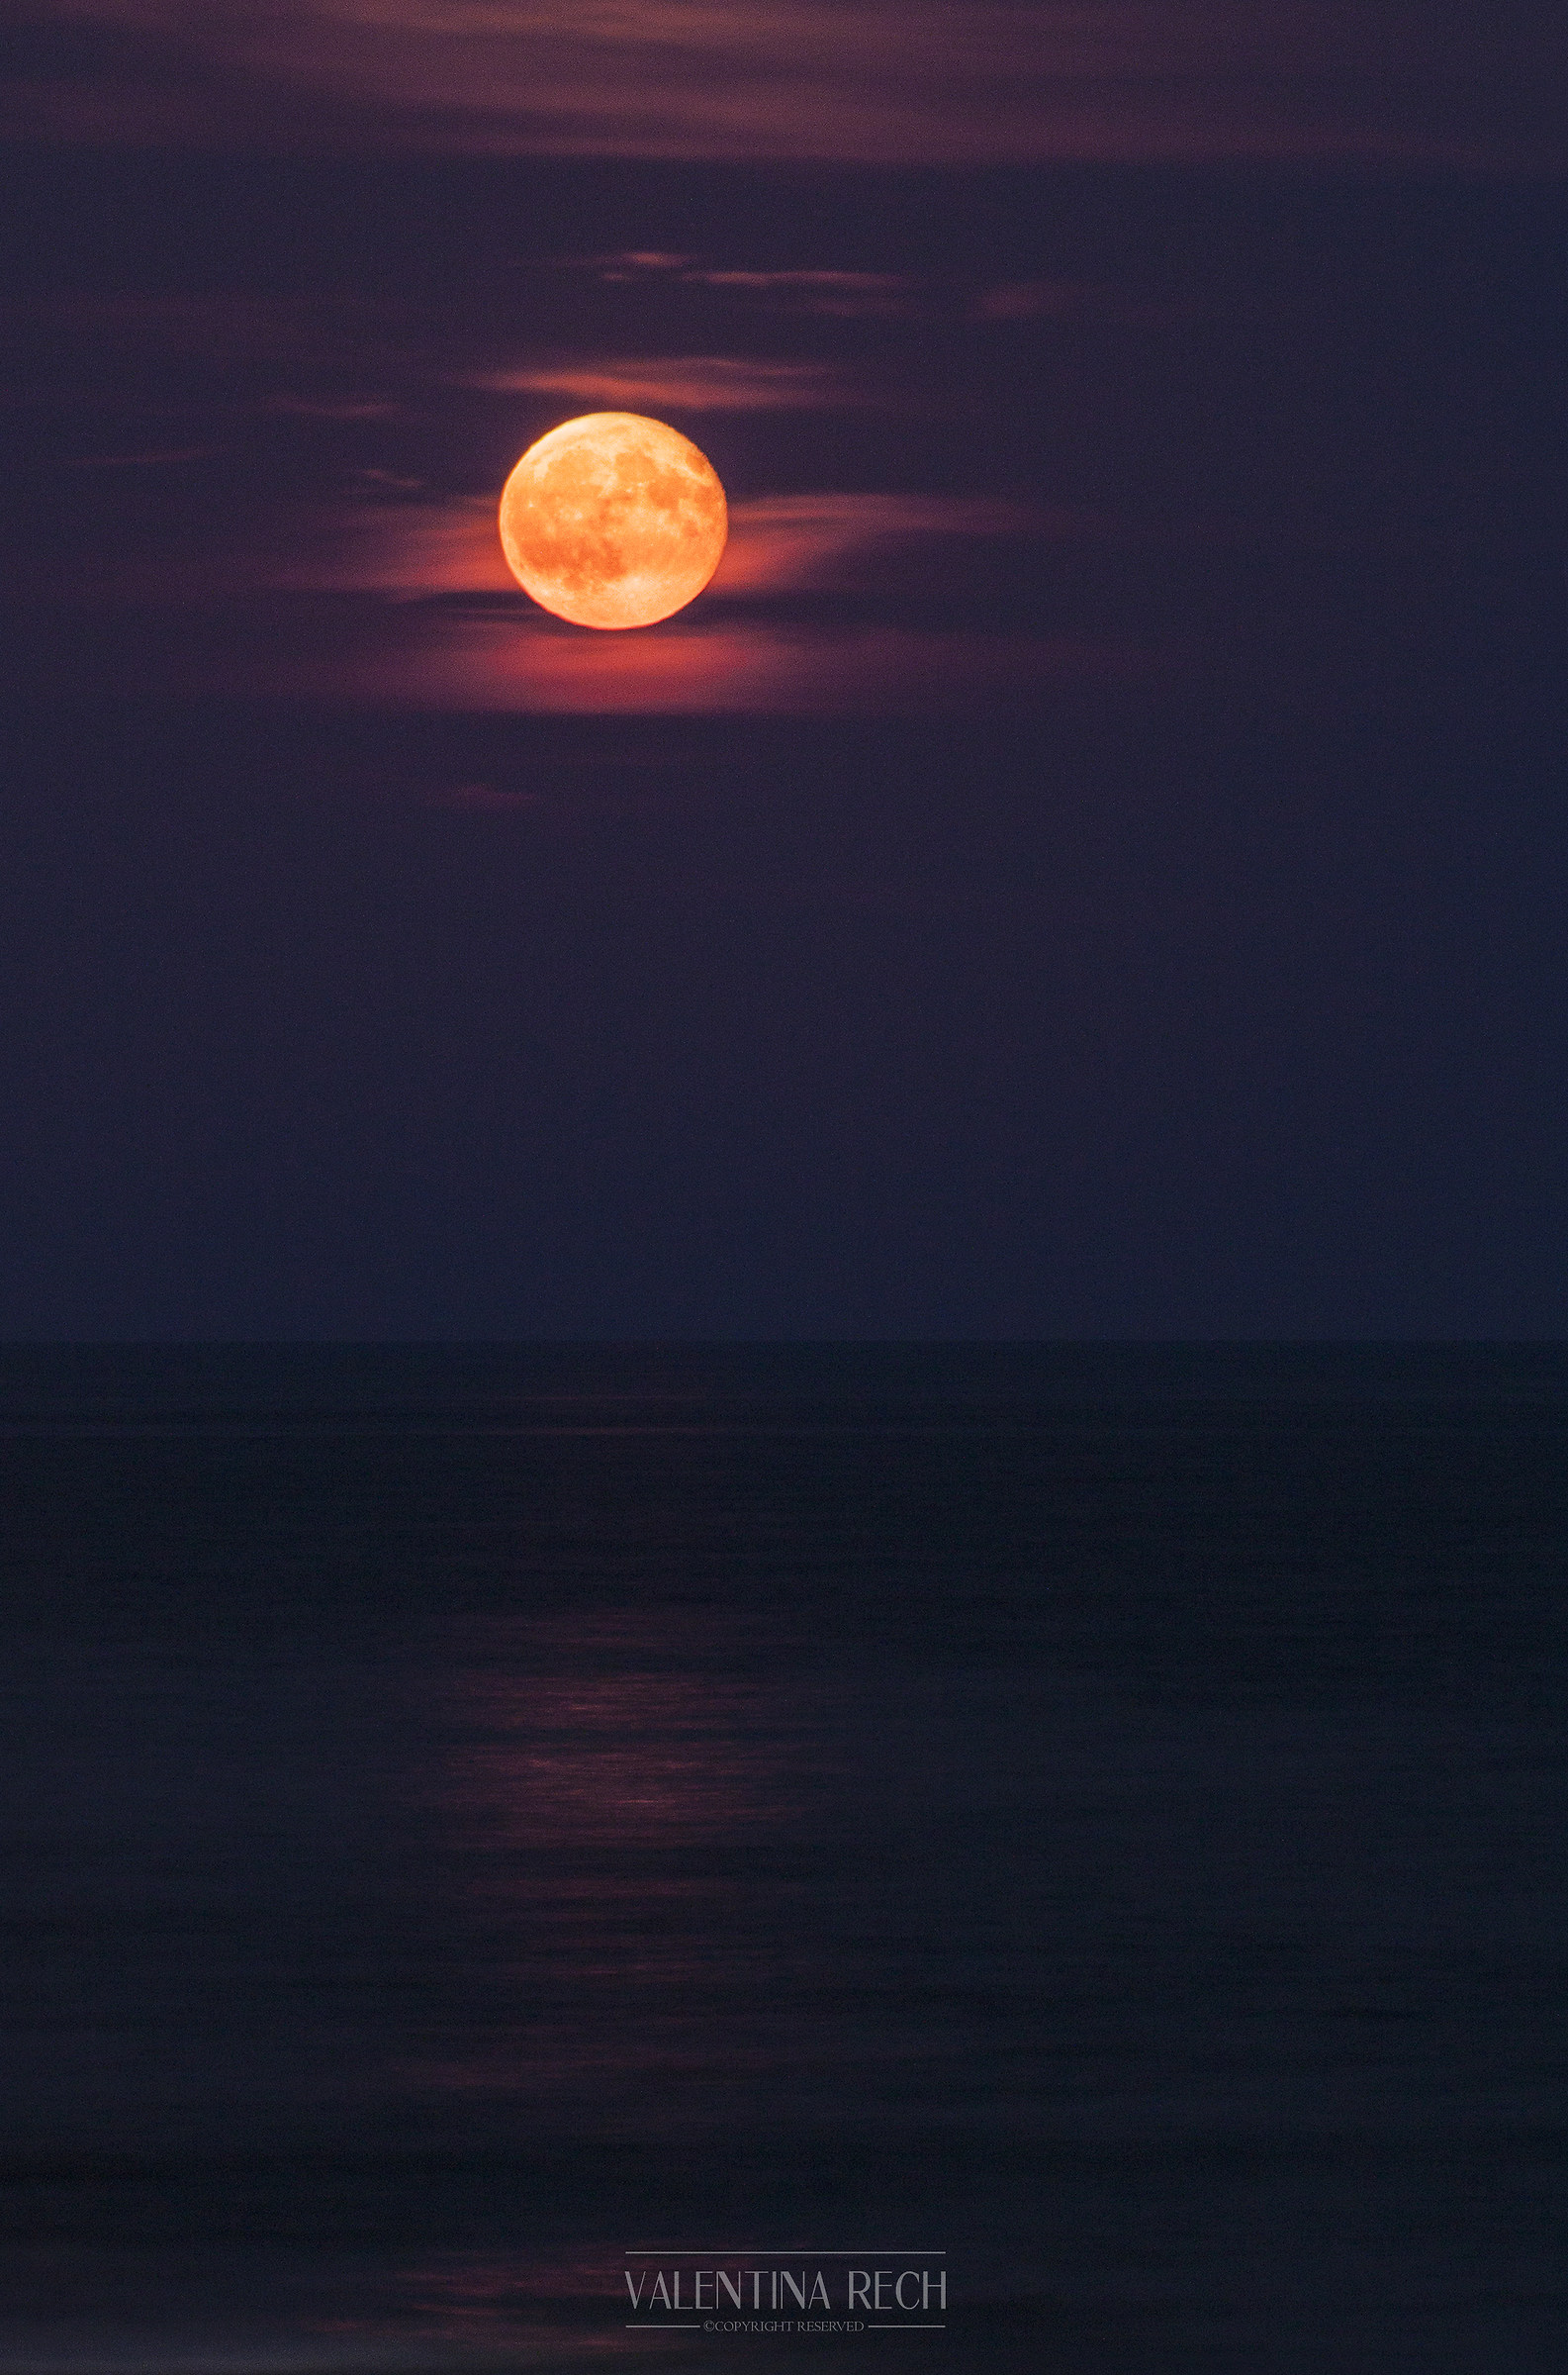 The moon rises over the sea...